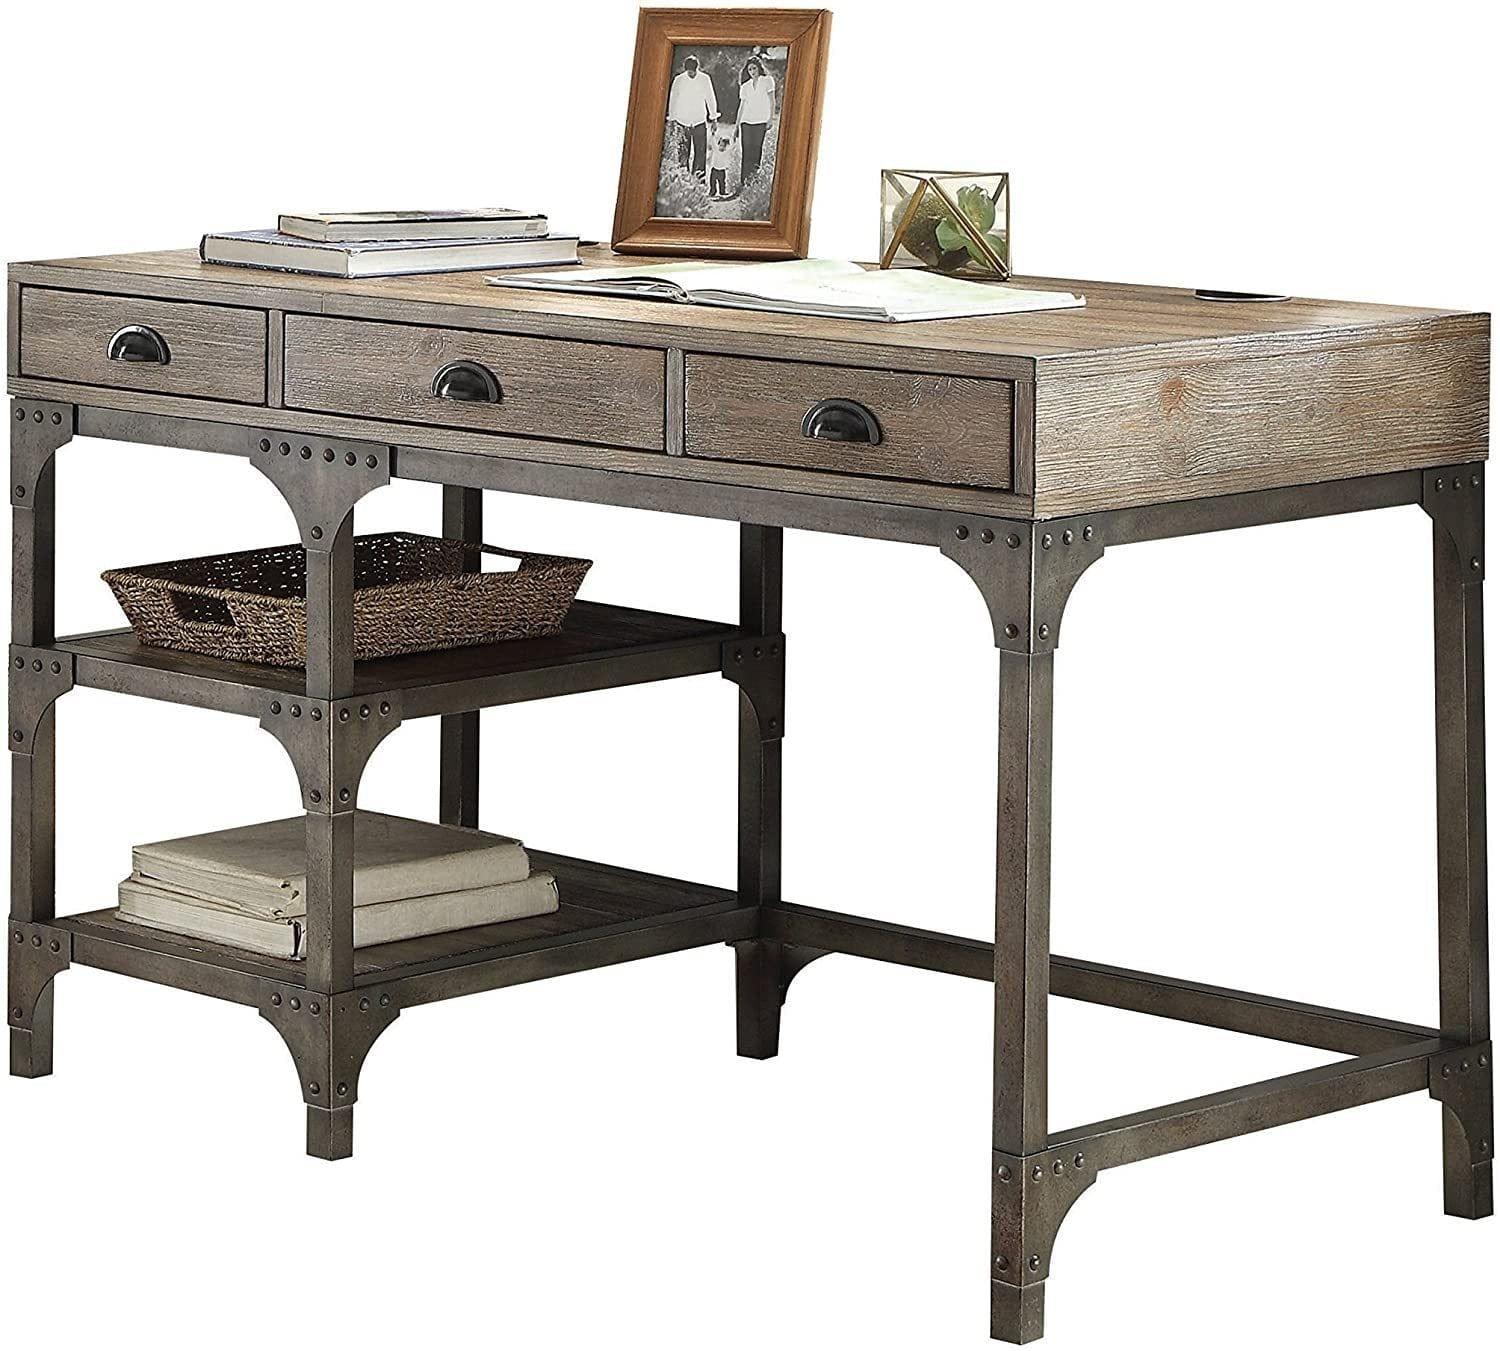 Shop ACME Gorden Desk in Weathered Oak & Antique Silver 92325 Mademoiselle Home Decor